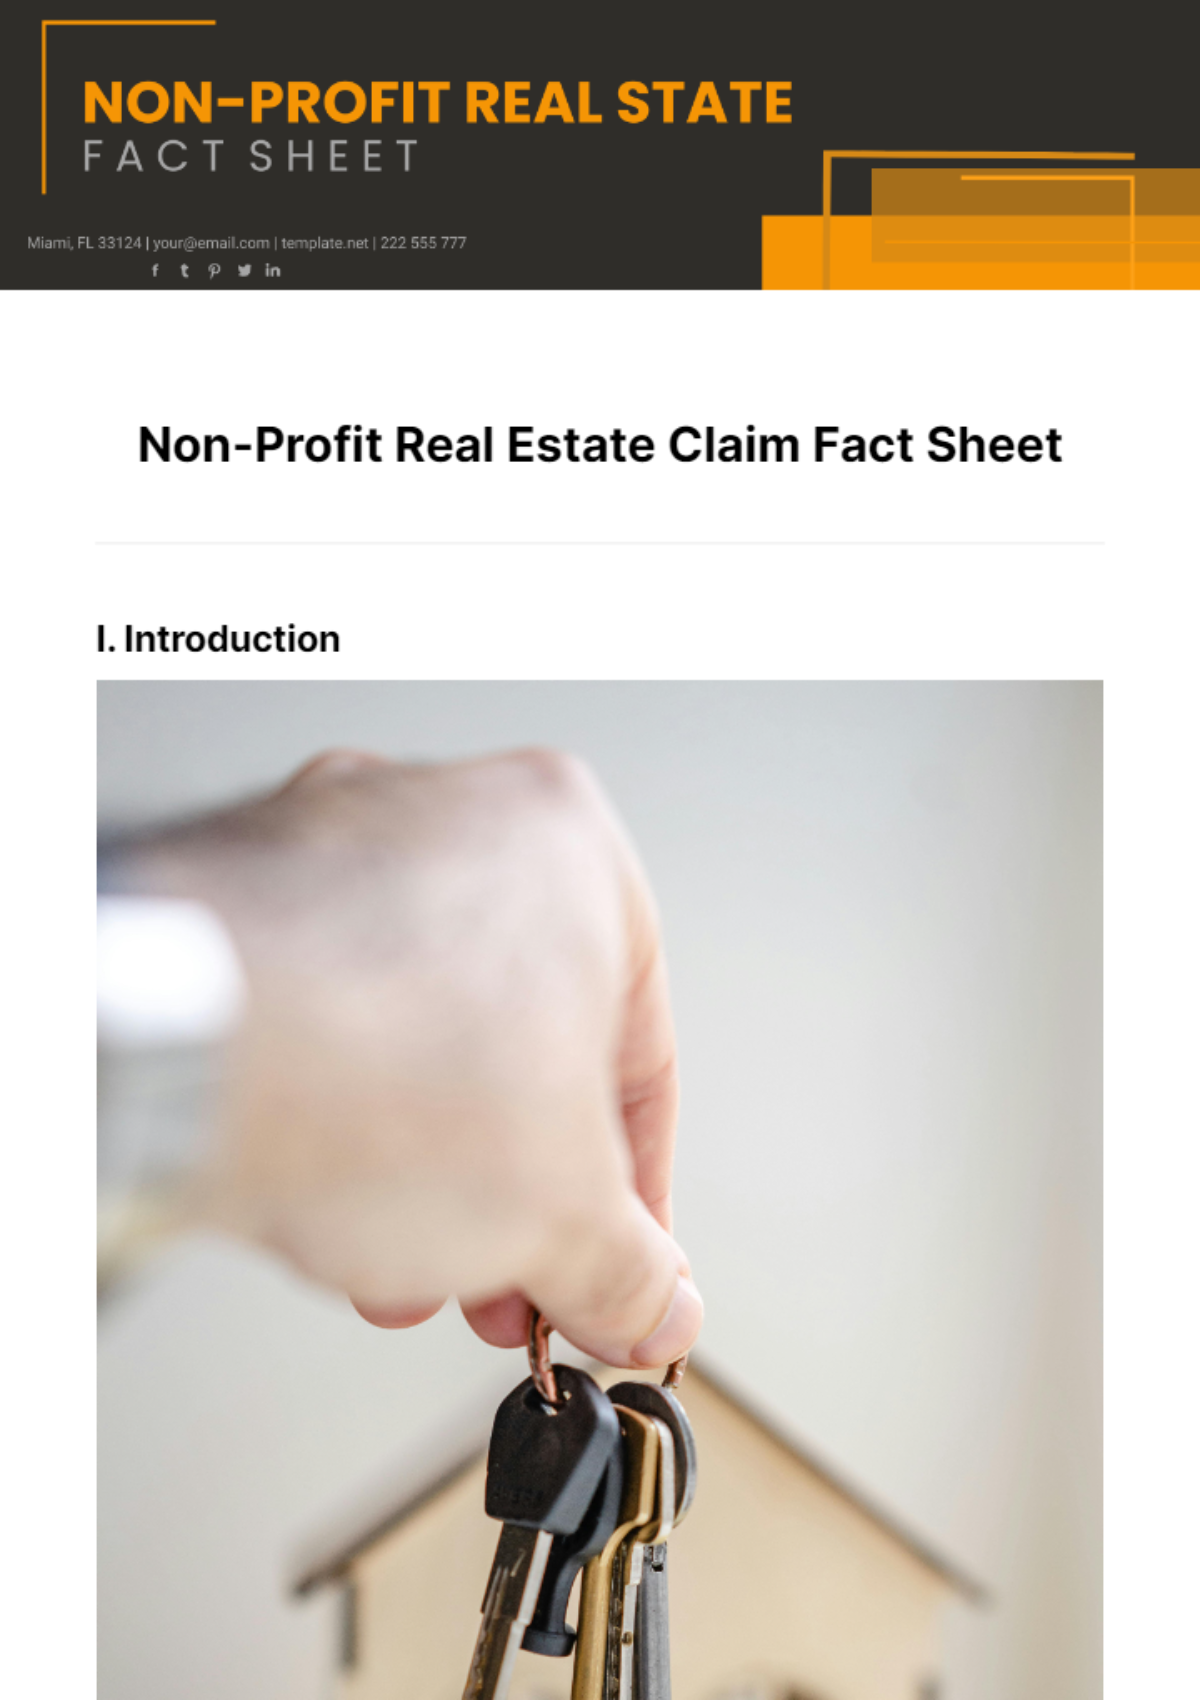 Non-Profit Real Estate Claim Fact Sheet Template